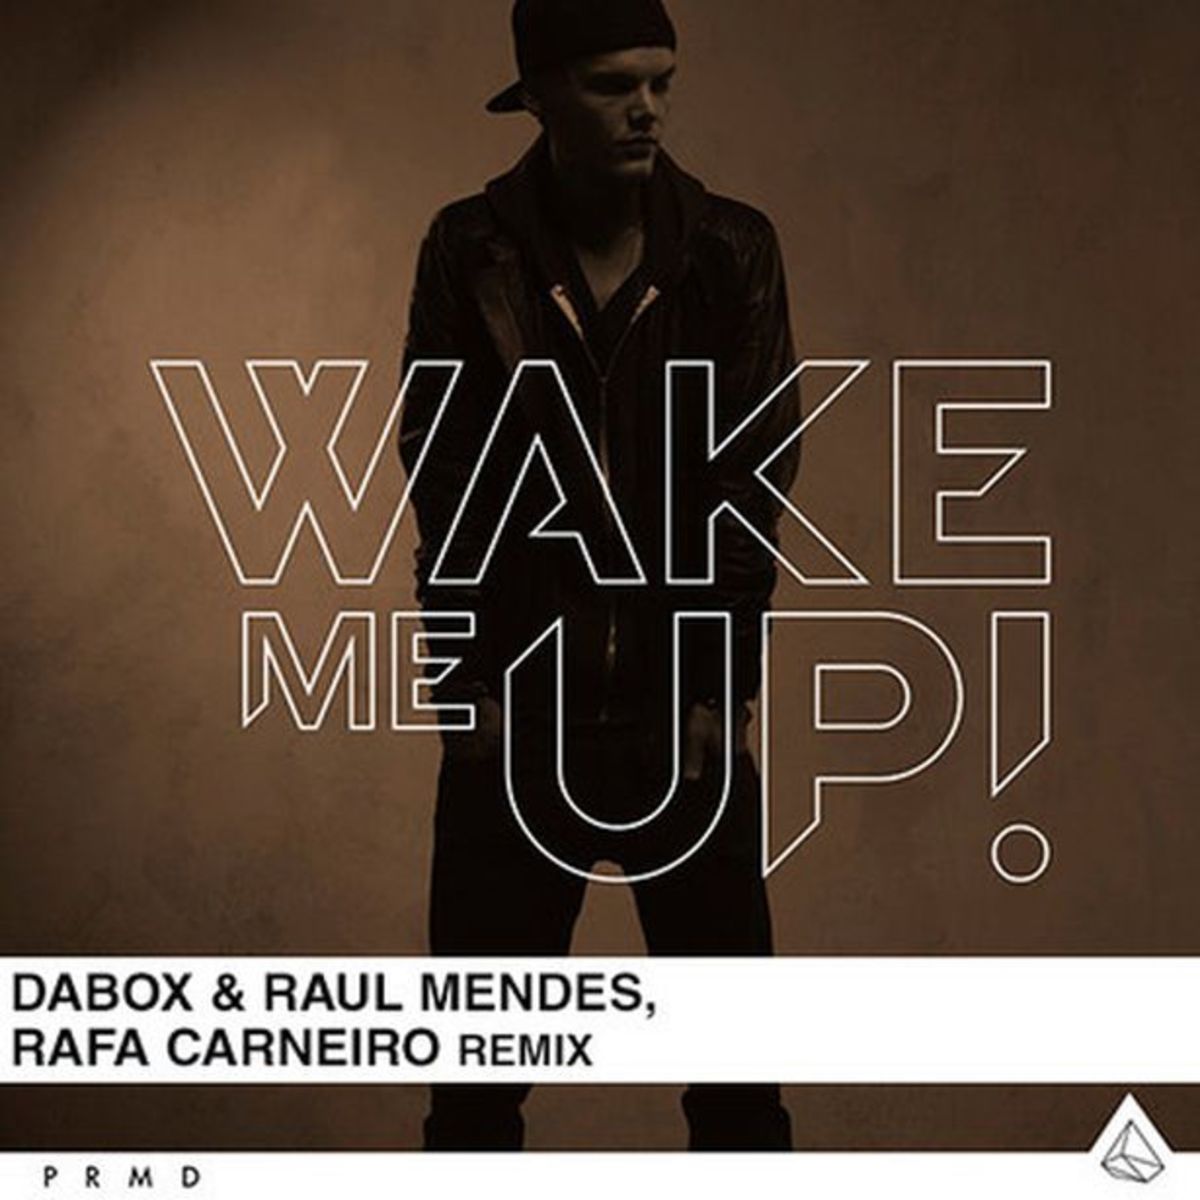 EDM Download: Avicii feat. Aloe Blacc - Wake Me Up (Dabox, Raul Mendes & Rafa Carneiro Remix)